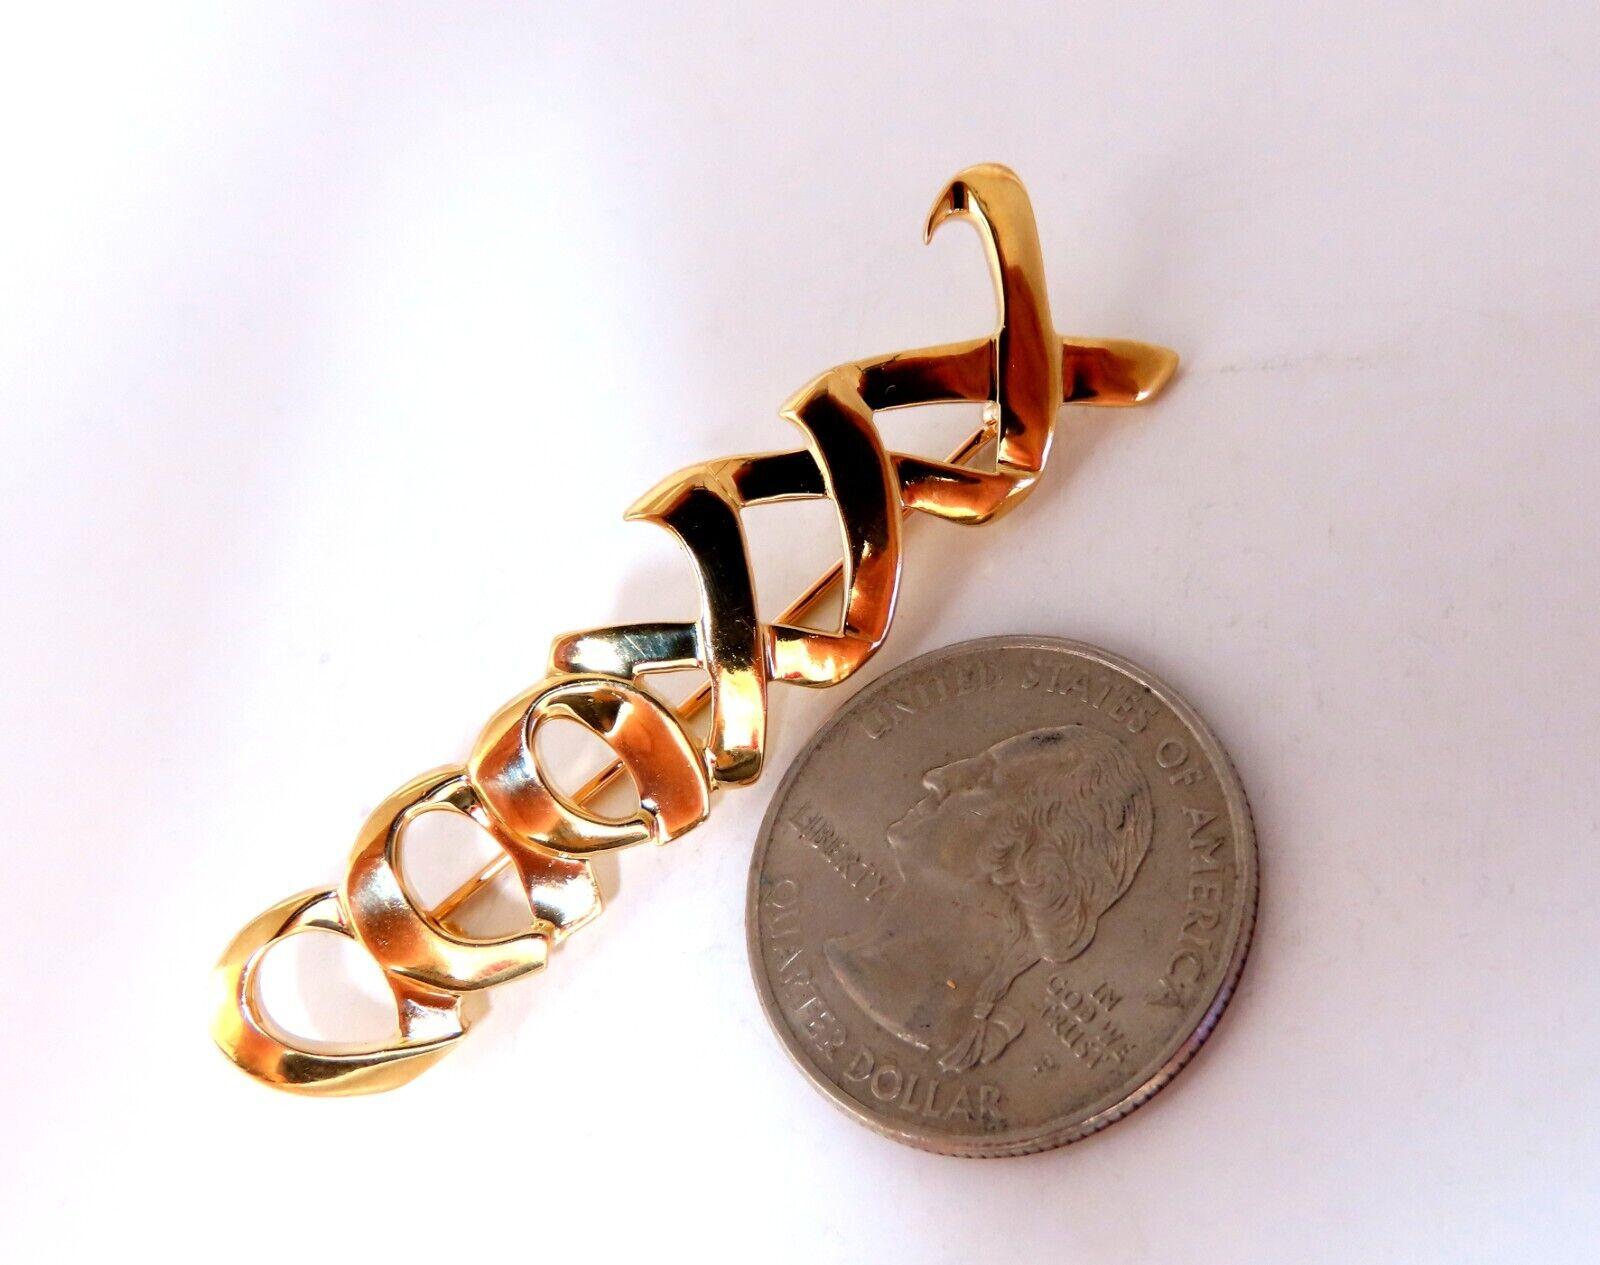 Broche Tiffany XO Gold de designer.

2.2 x 0,57 pouce

or jaune 18kt 

8 grammes